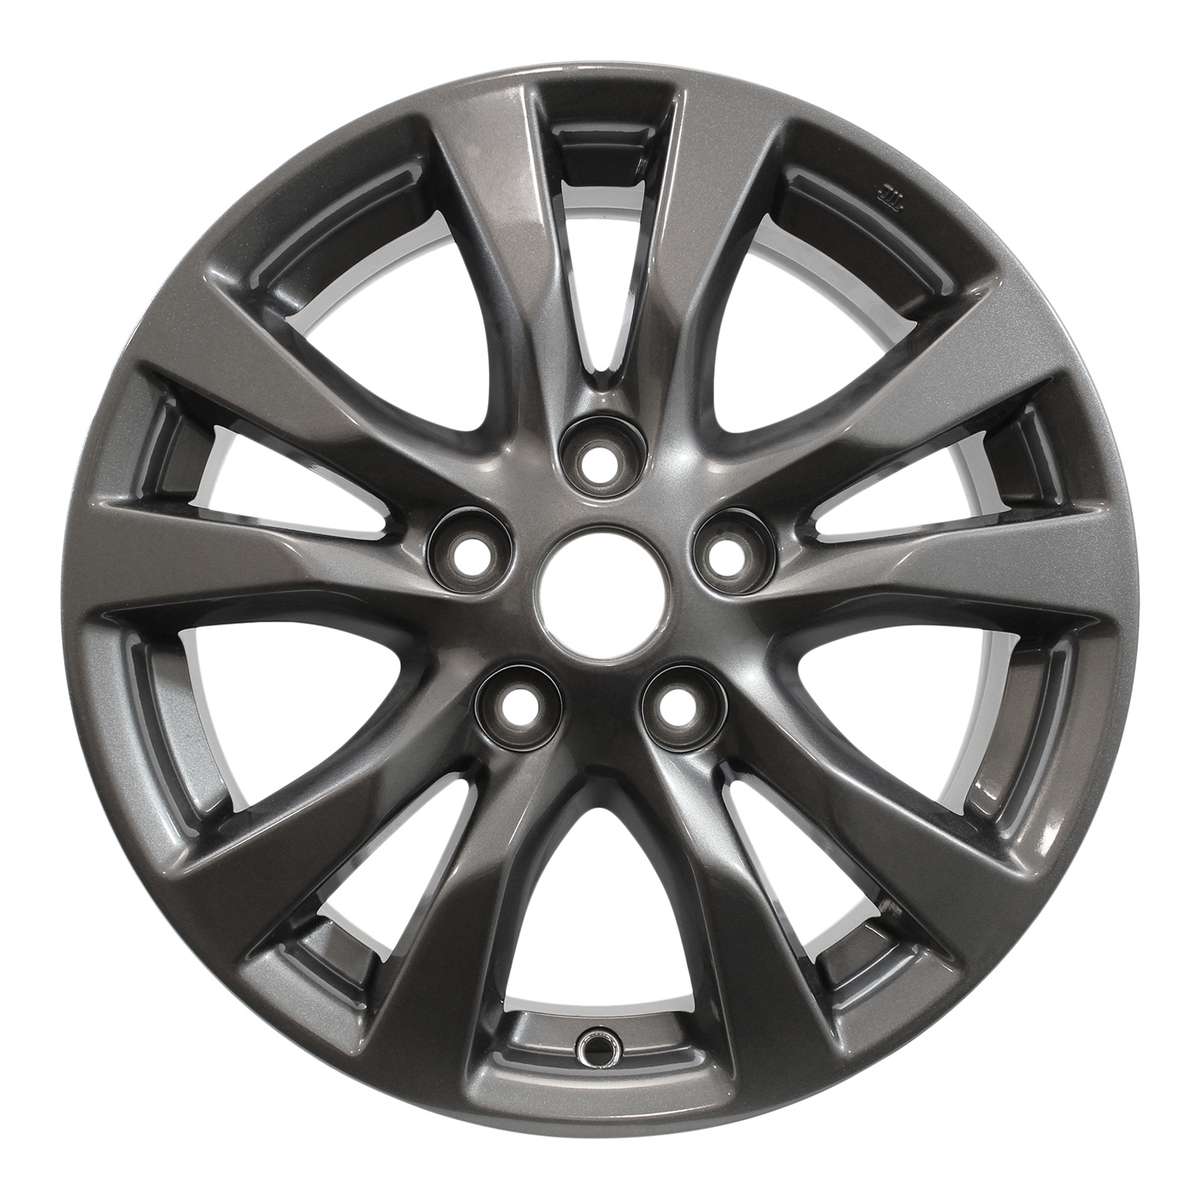 2015 Nissan Altima New 16" Replacement Wheel Rim RW62718C